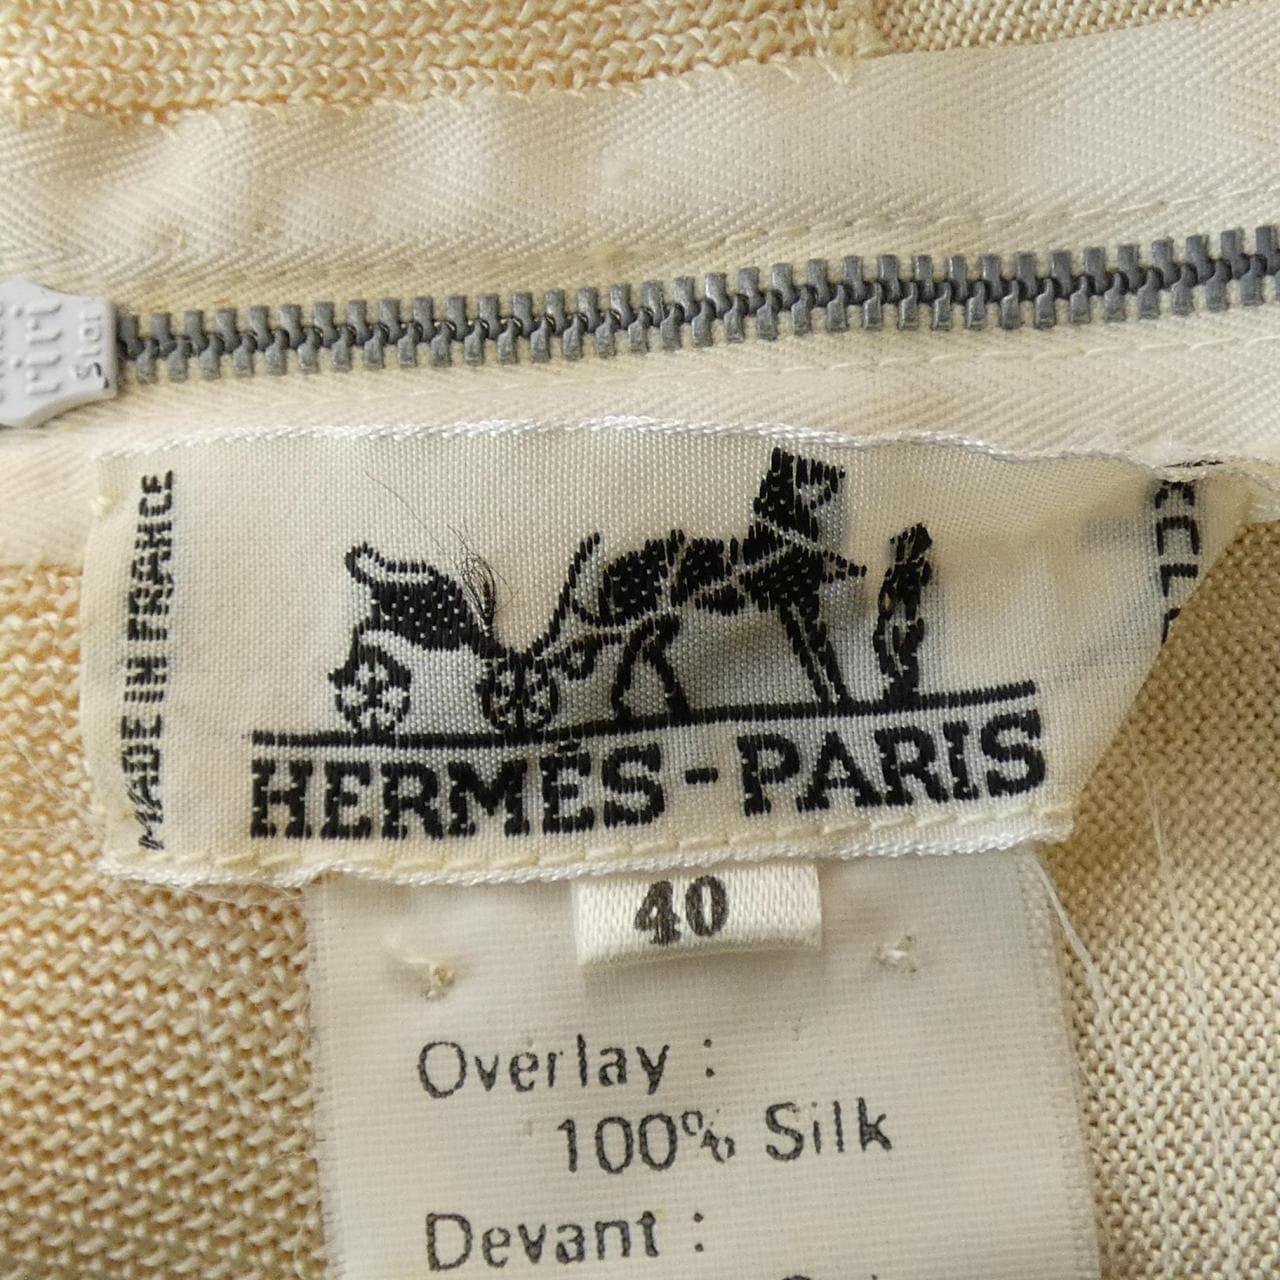 [vintage] HERMES针织衫